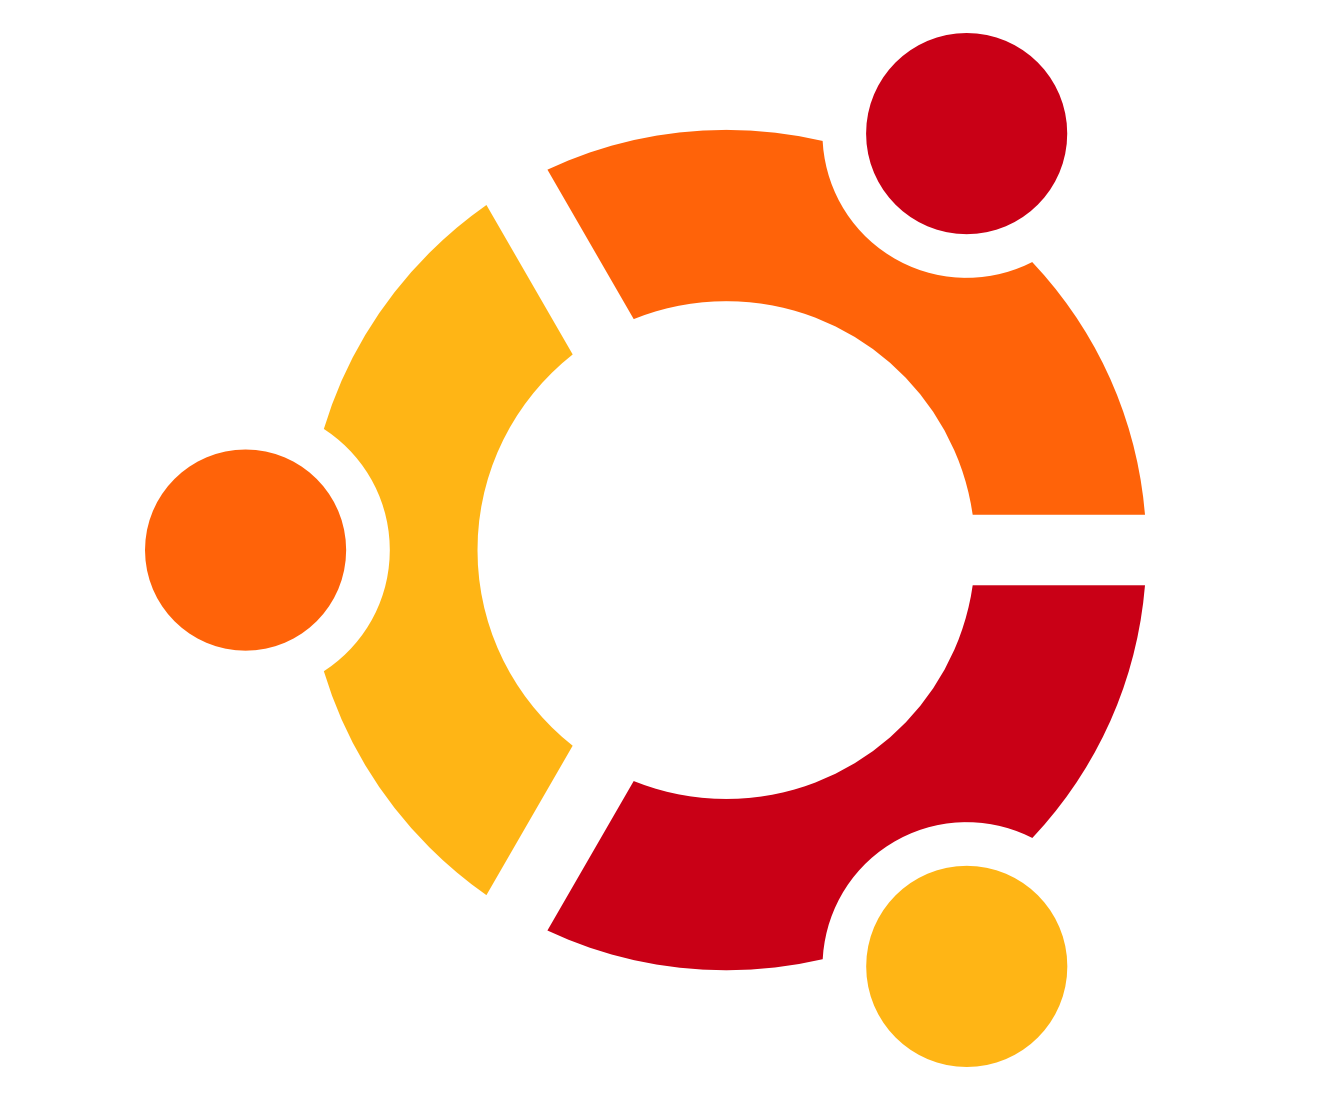 Ubuntu 22.04